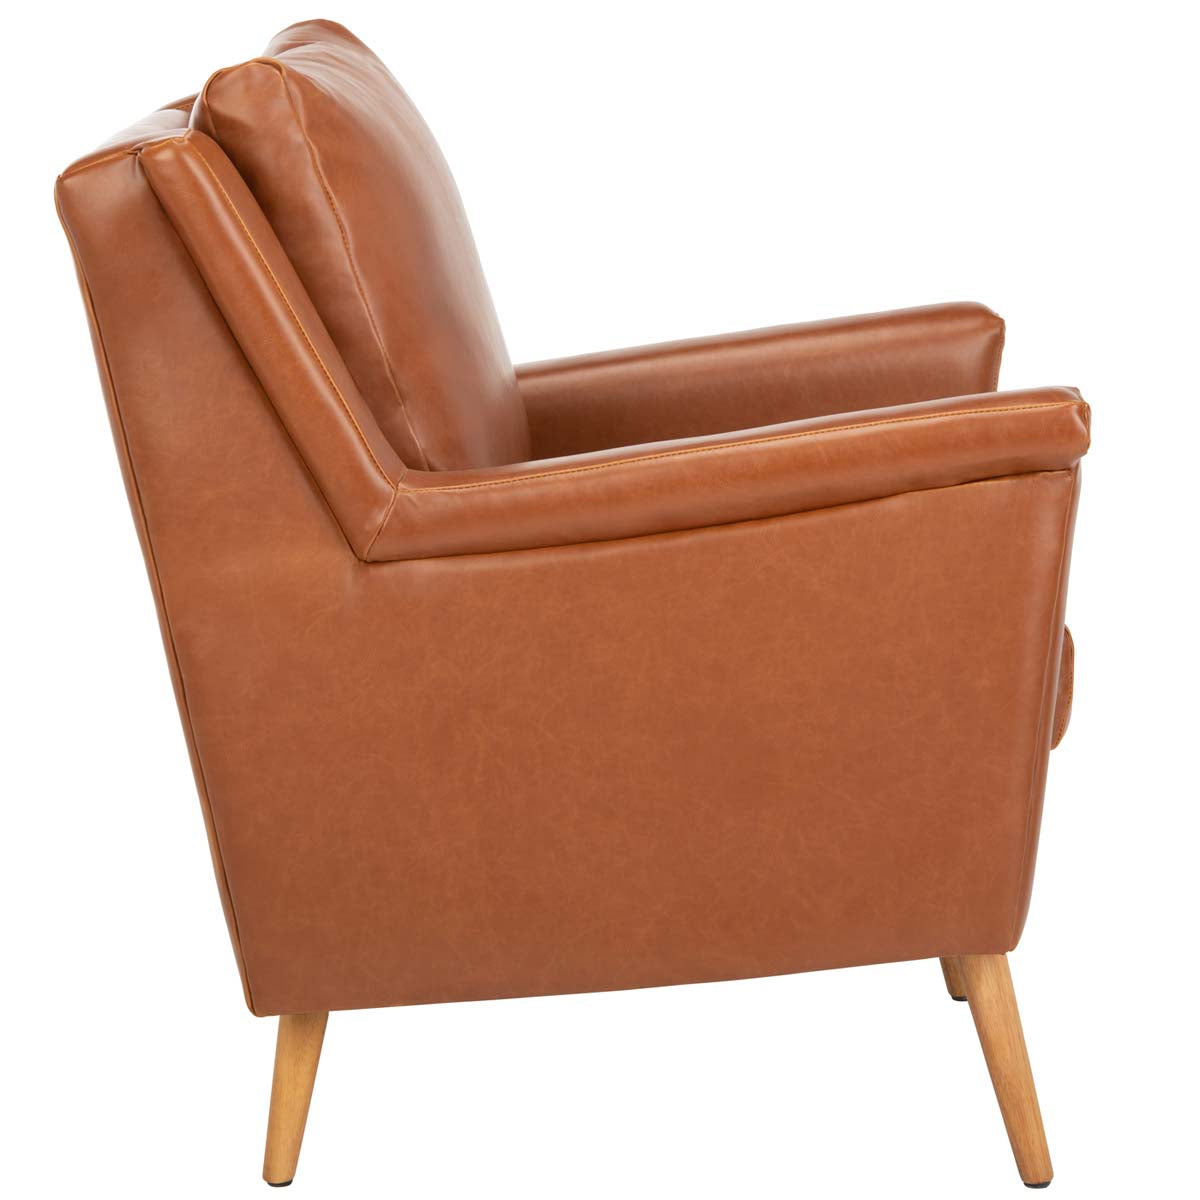 Safavieh Astrid Mid Century Arm Chair , ACH4507